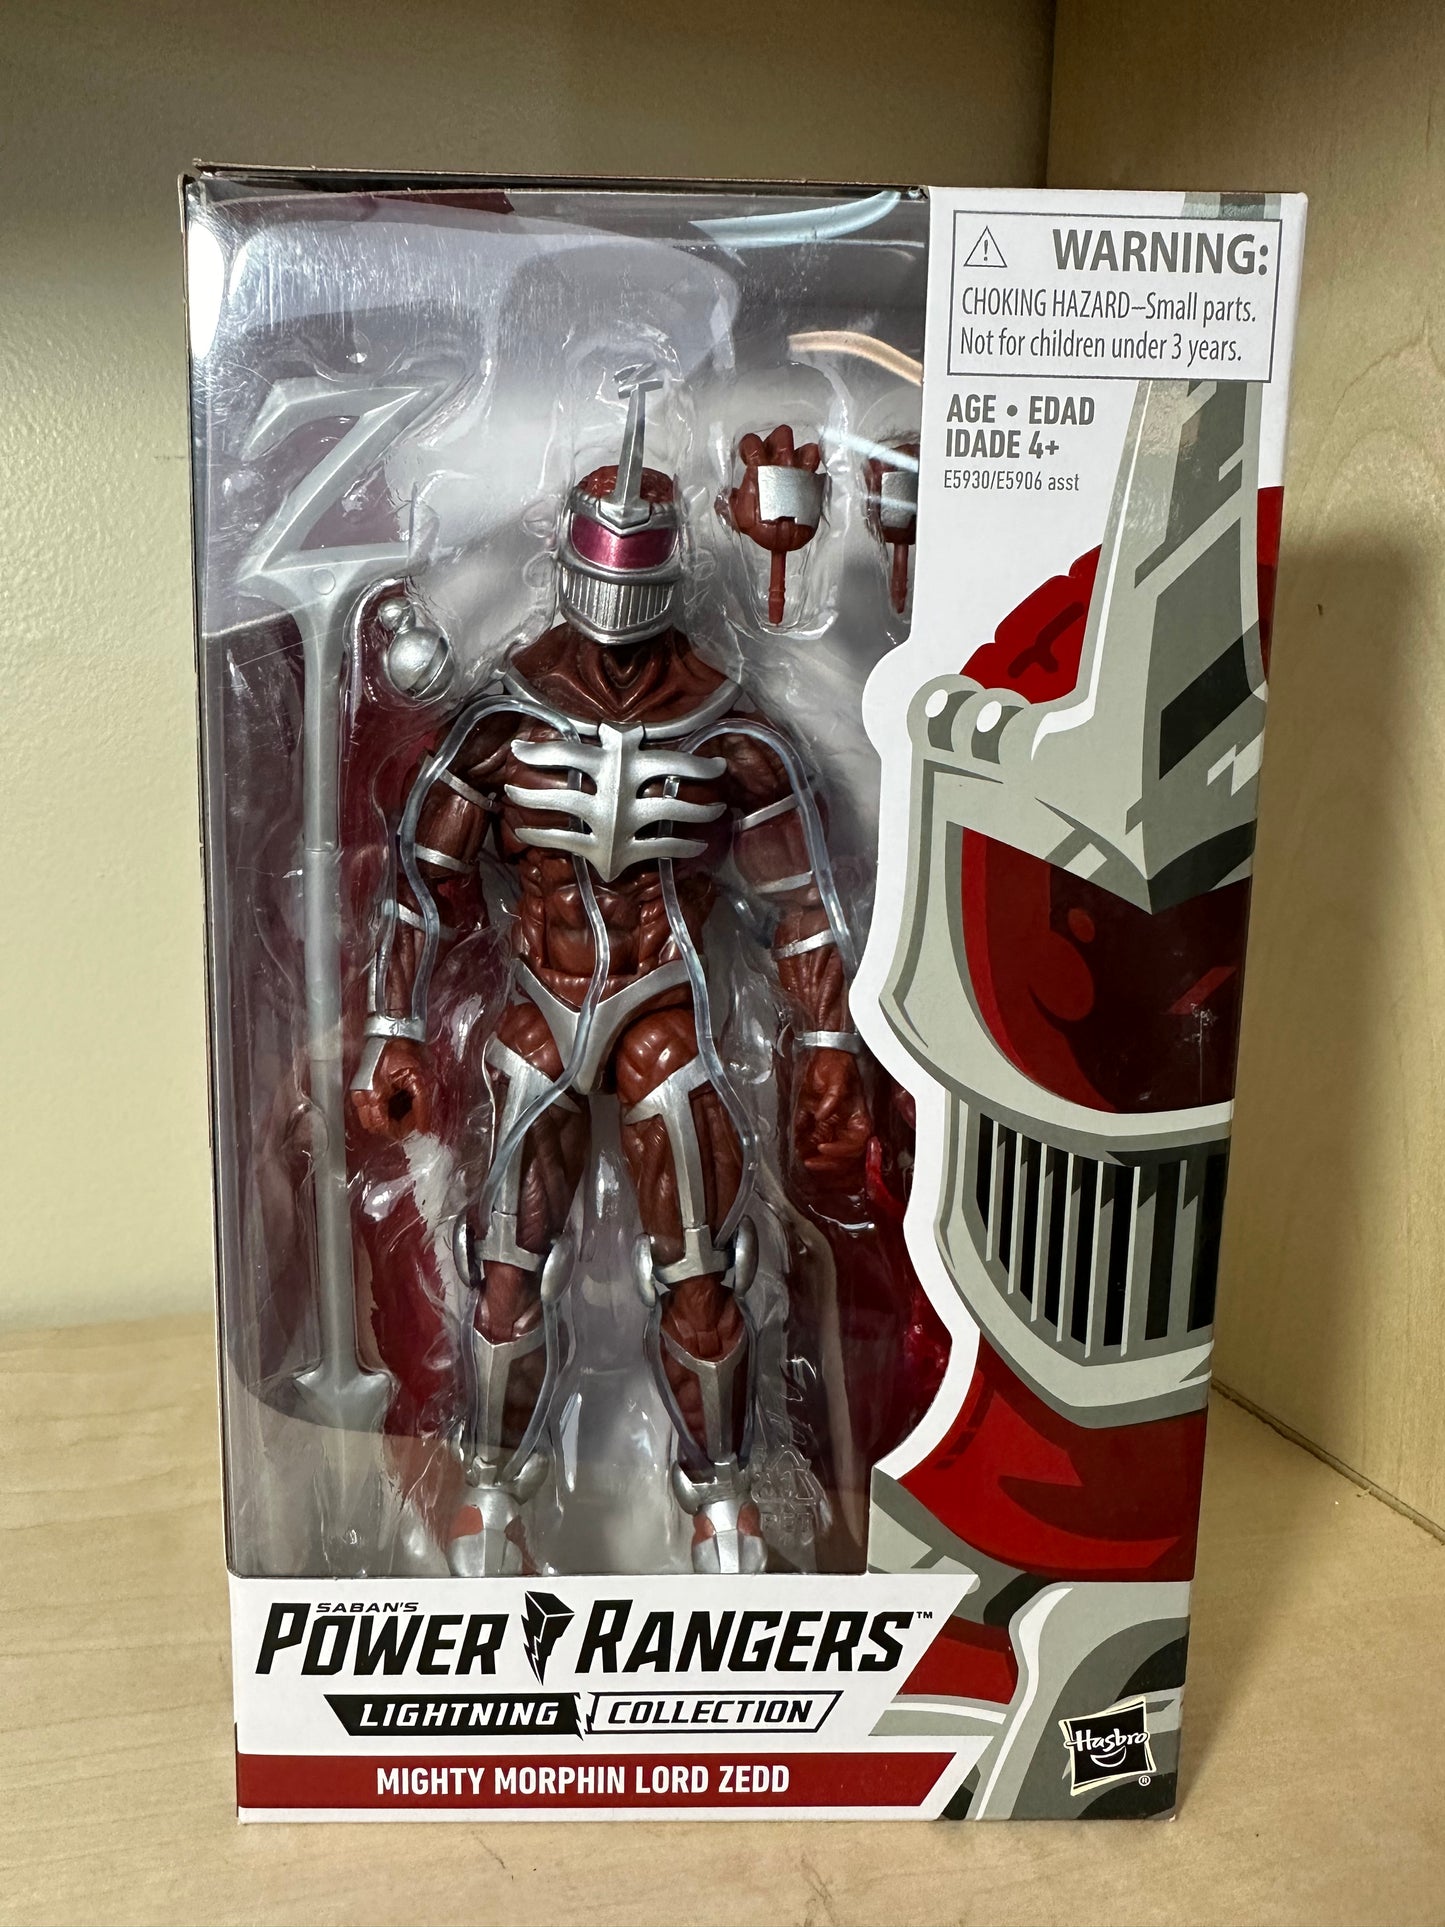 Power Ranger’s Lightning Collection Lord Zedd MISB